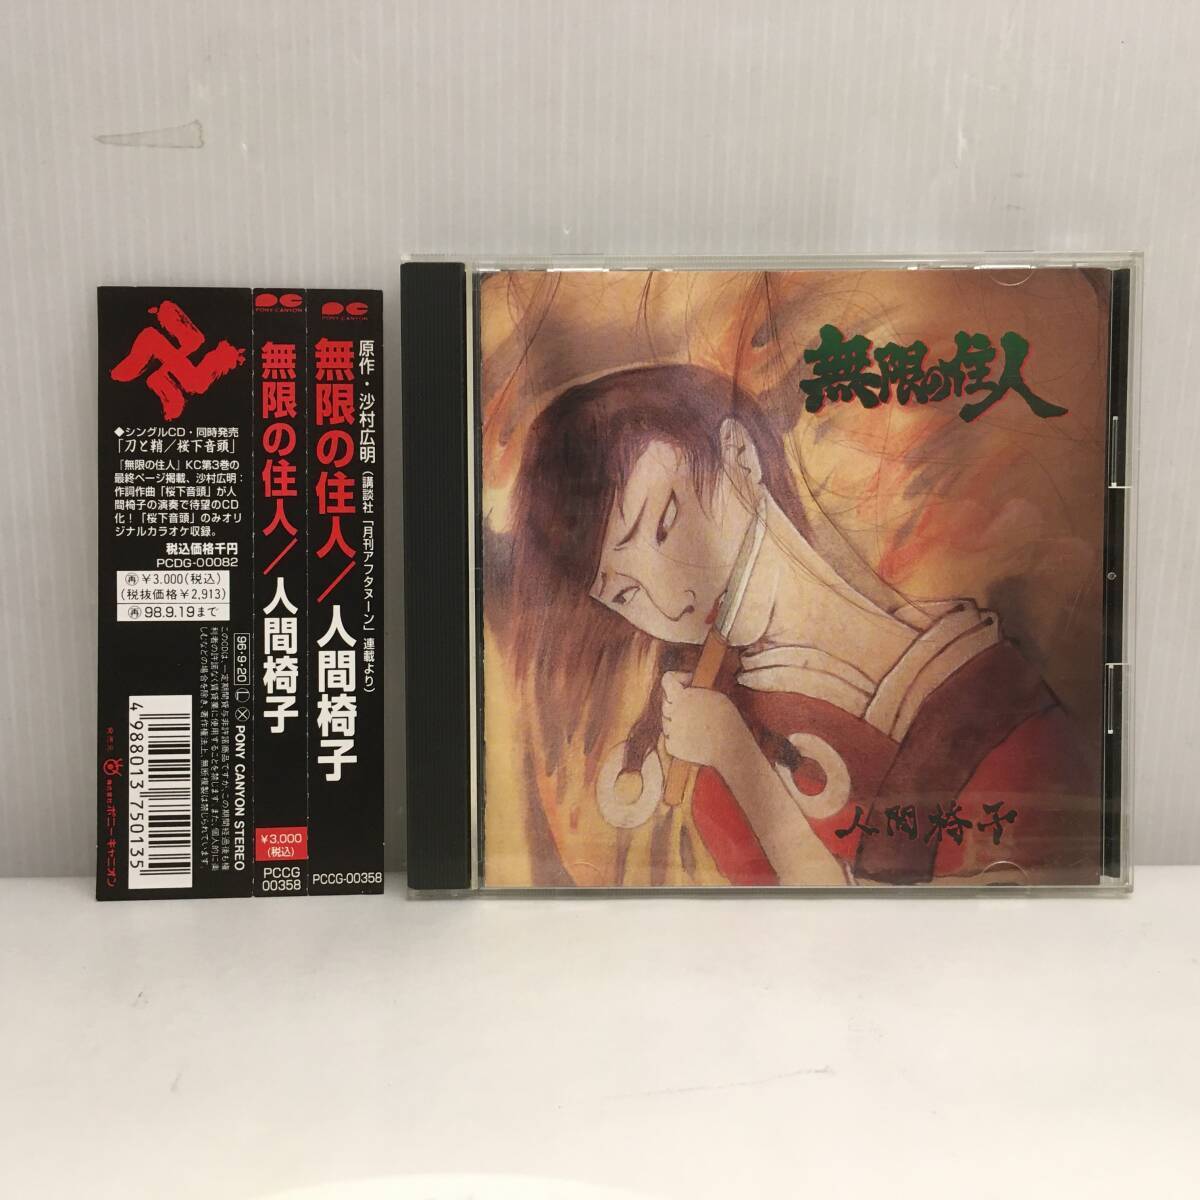 ■ CD Human Chair ④ Infinite Resident Image Альбом Оригинал, Hiroaki Samura с Obi ■